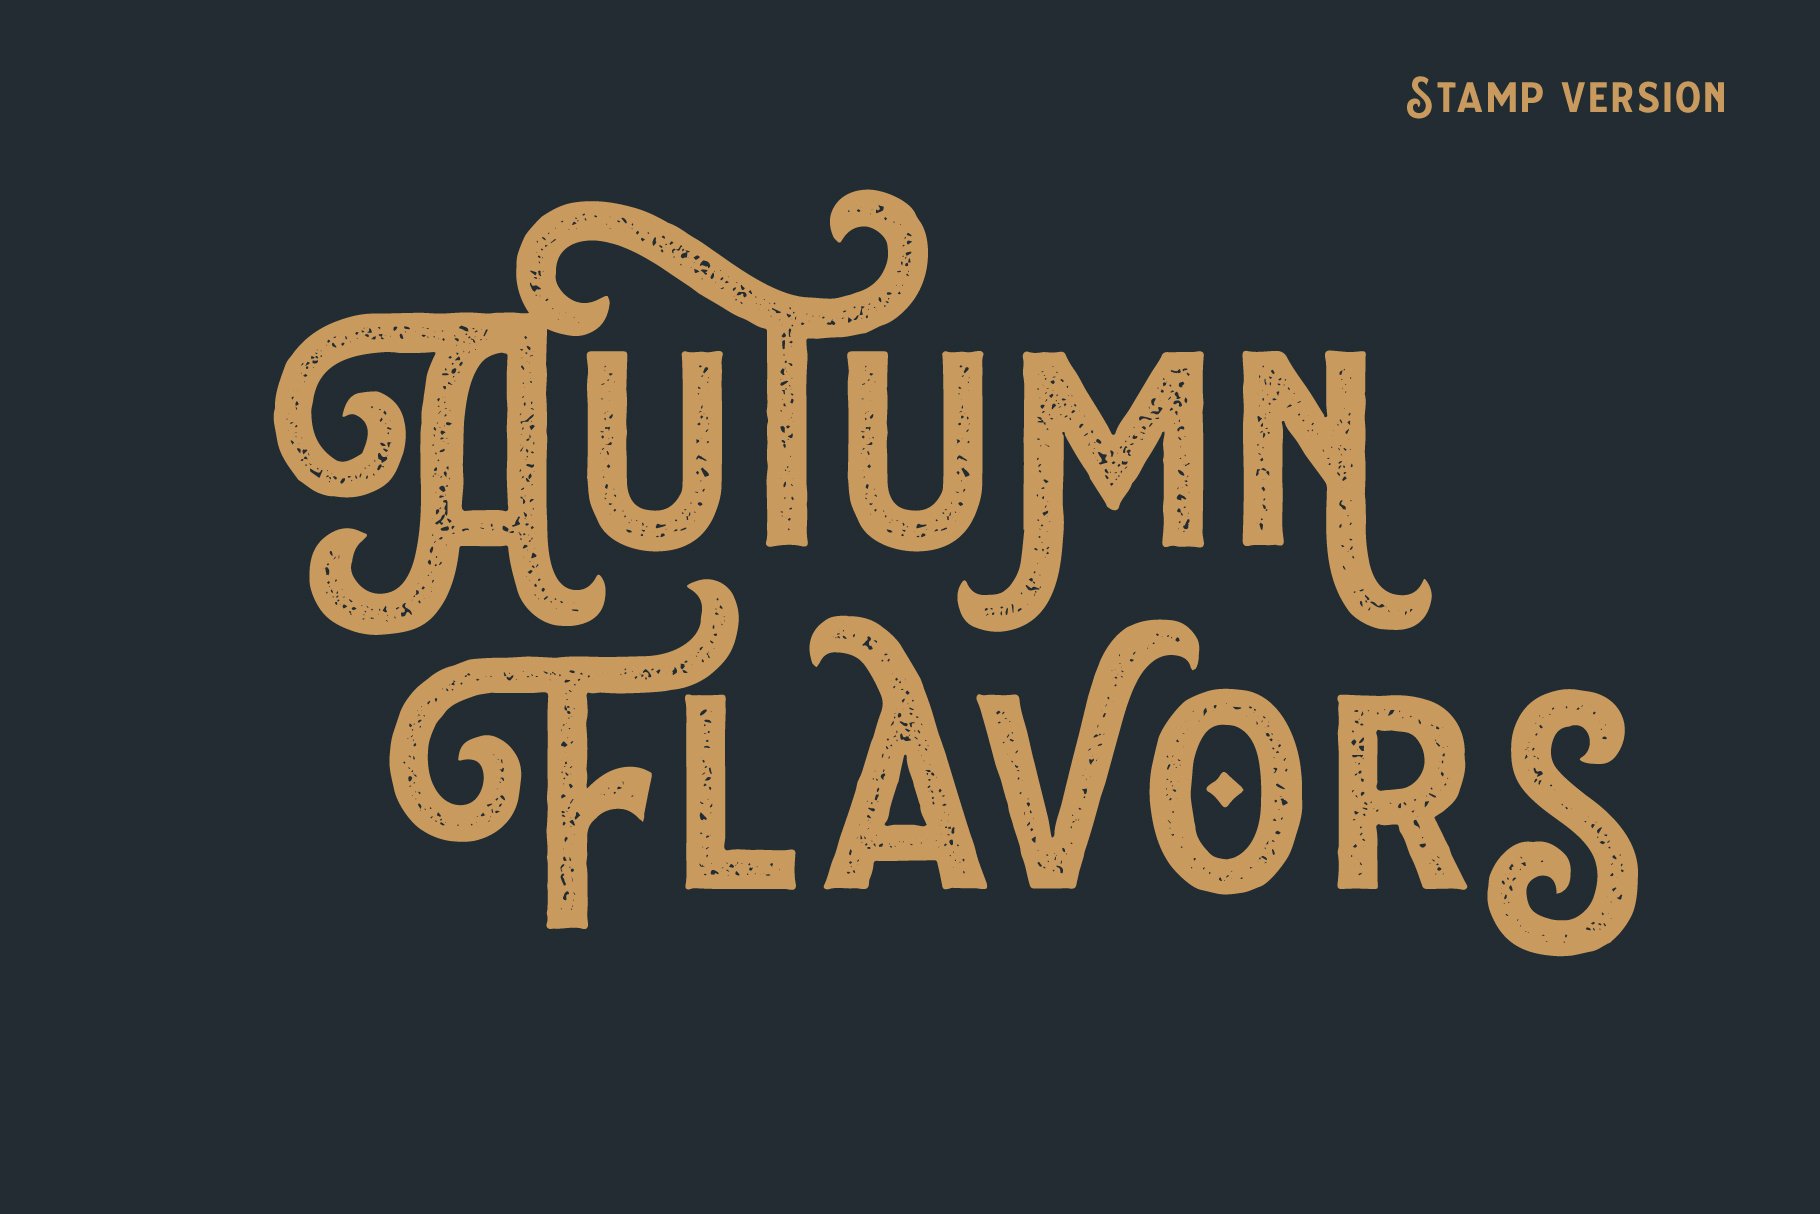 autumn flavors stamp 361